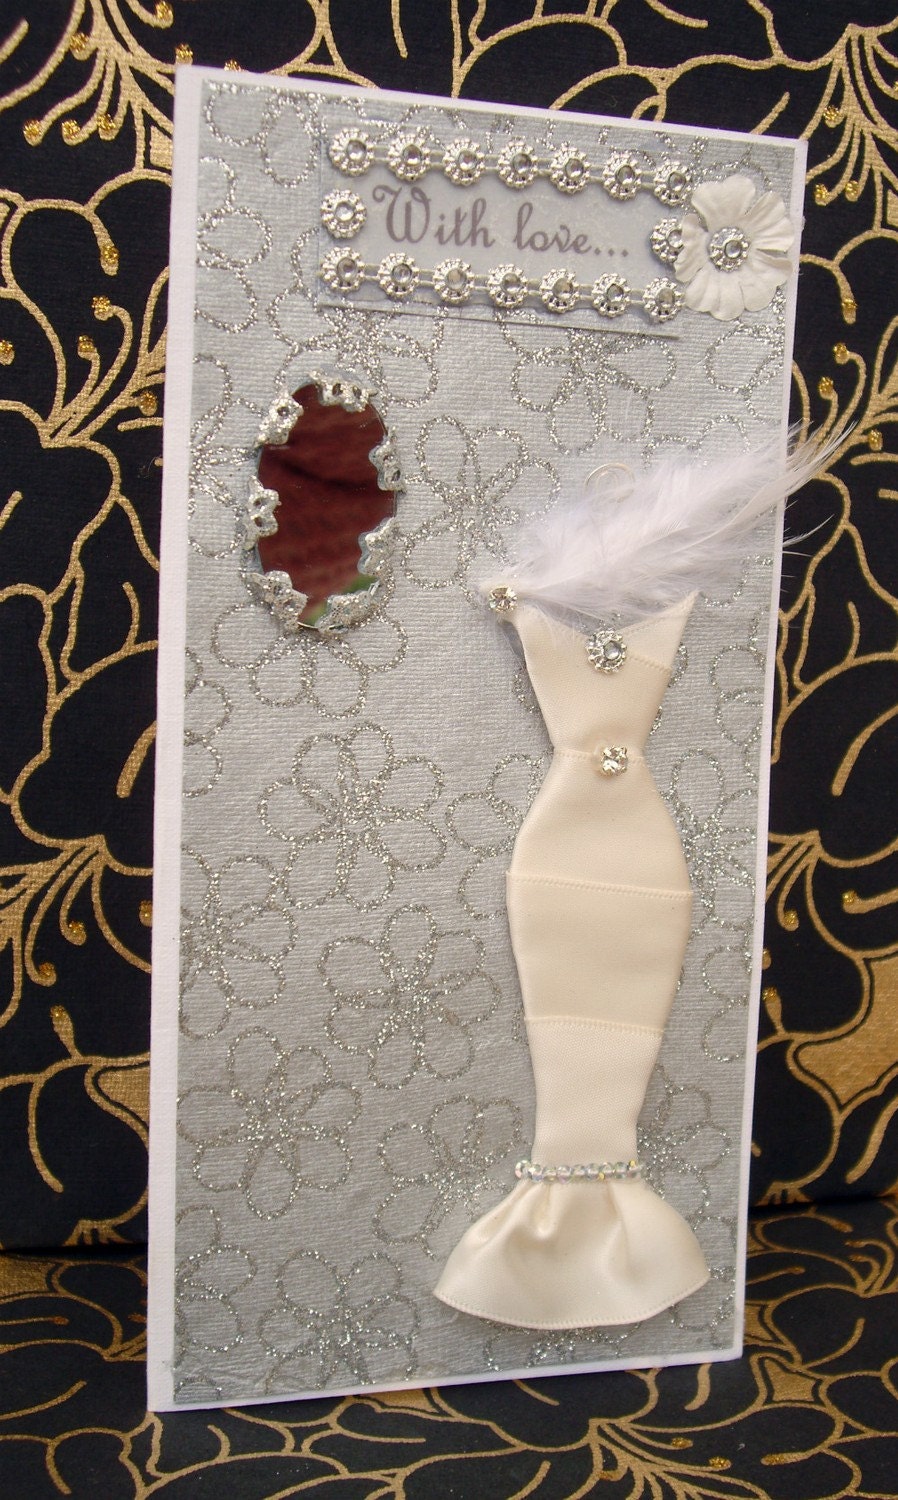 SALE With love...Dress Card / Handmade Greeting Card